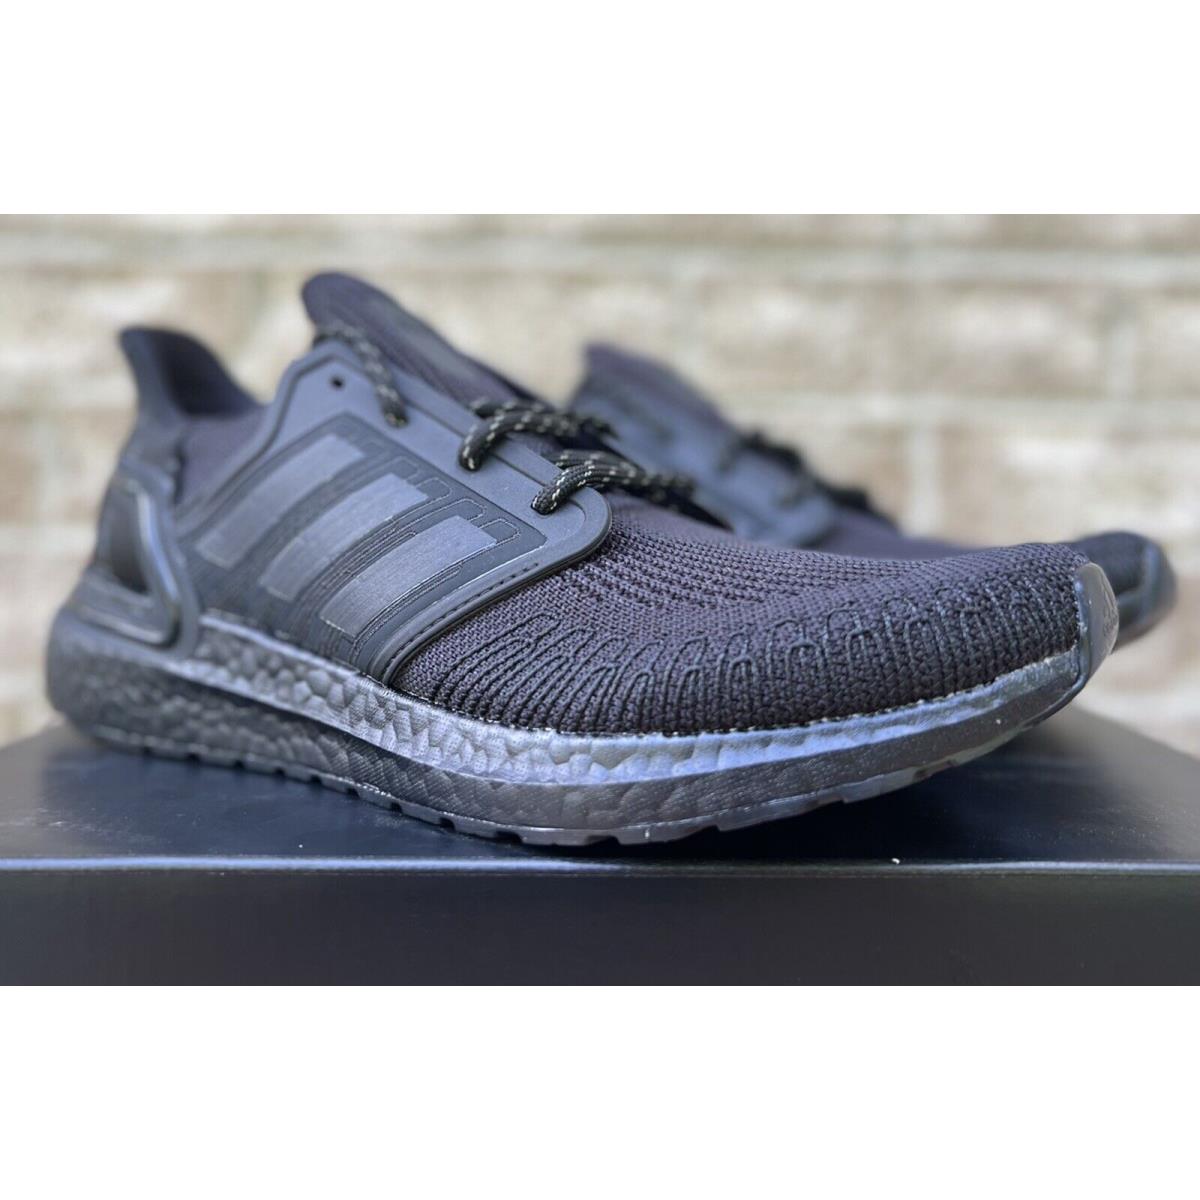 Adidas shoes UltraBoost - TRIPLE BLACK 3